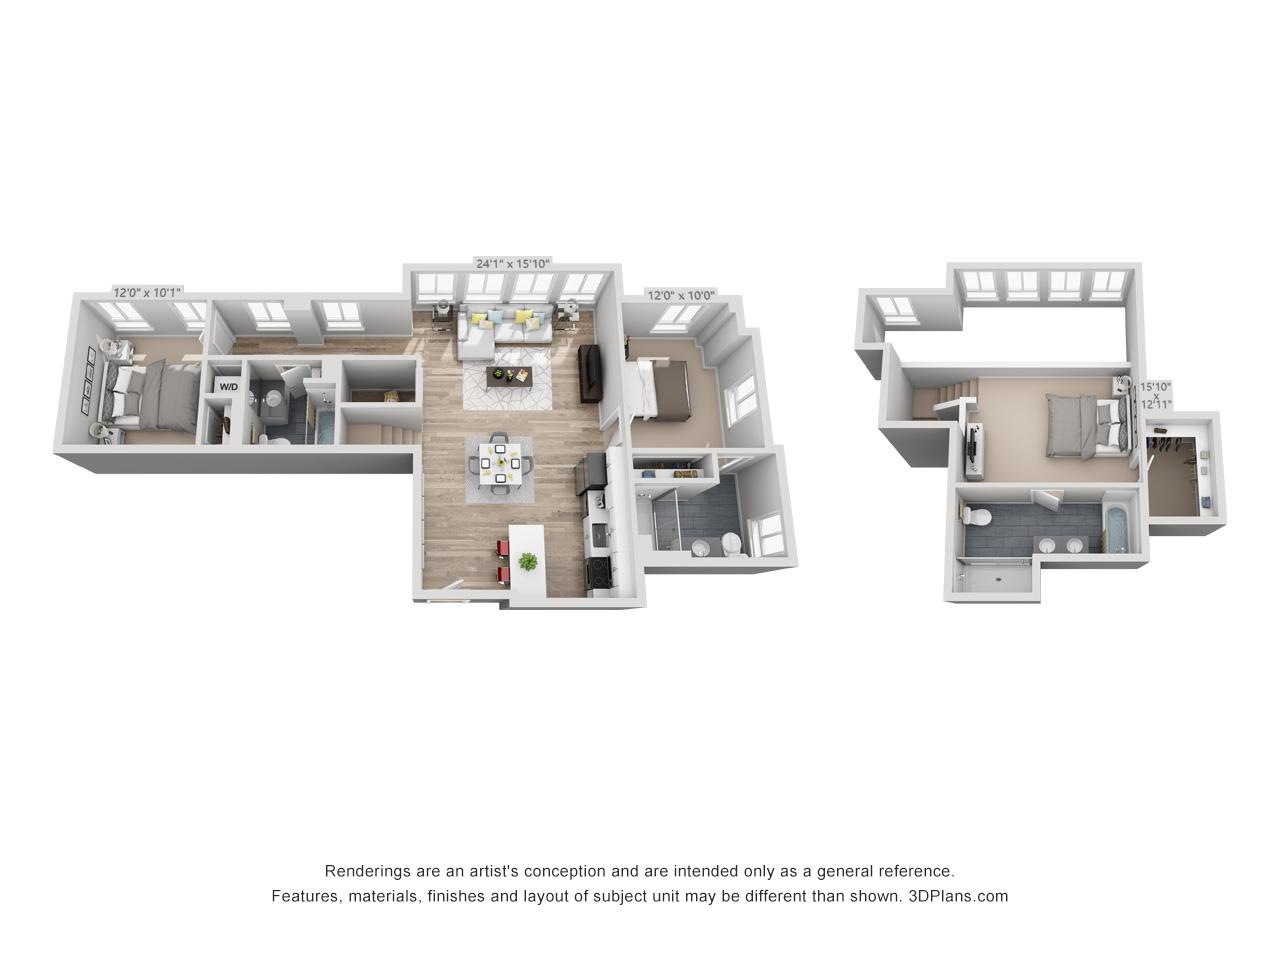 3 bedroom apartment in rittenhouse square area